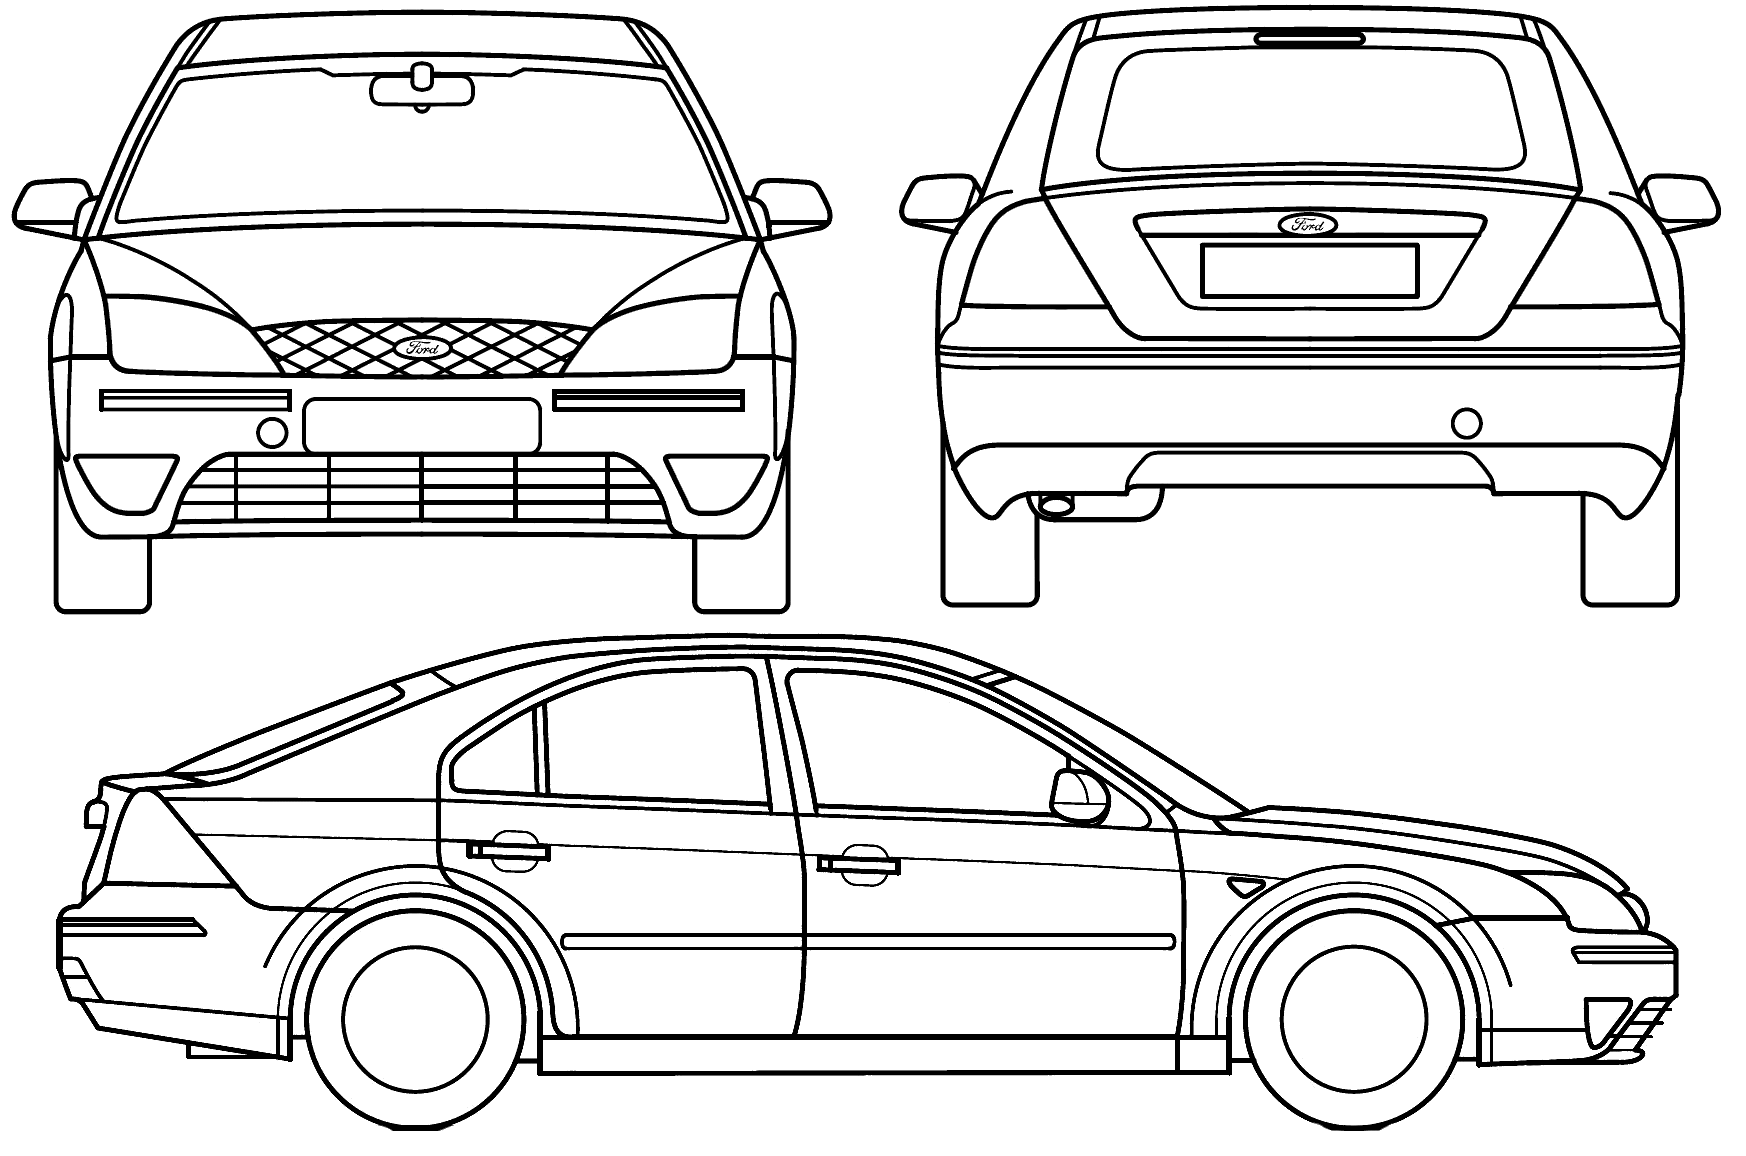 Ford Mondeo blueprint